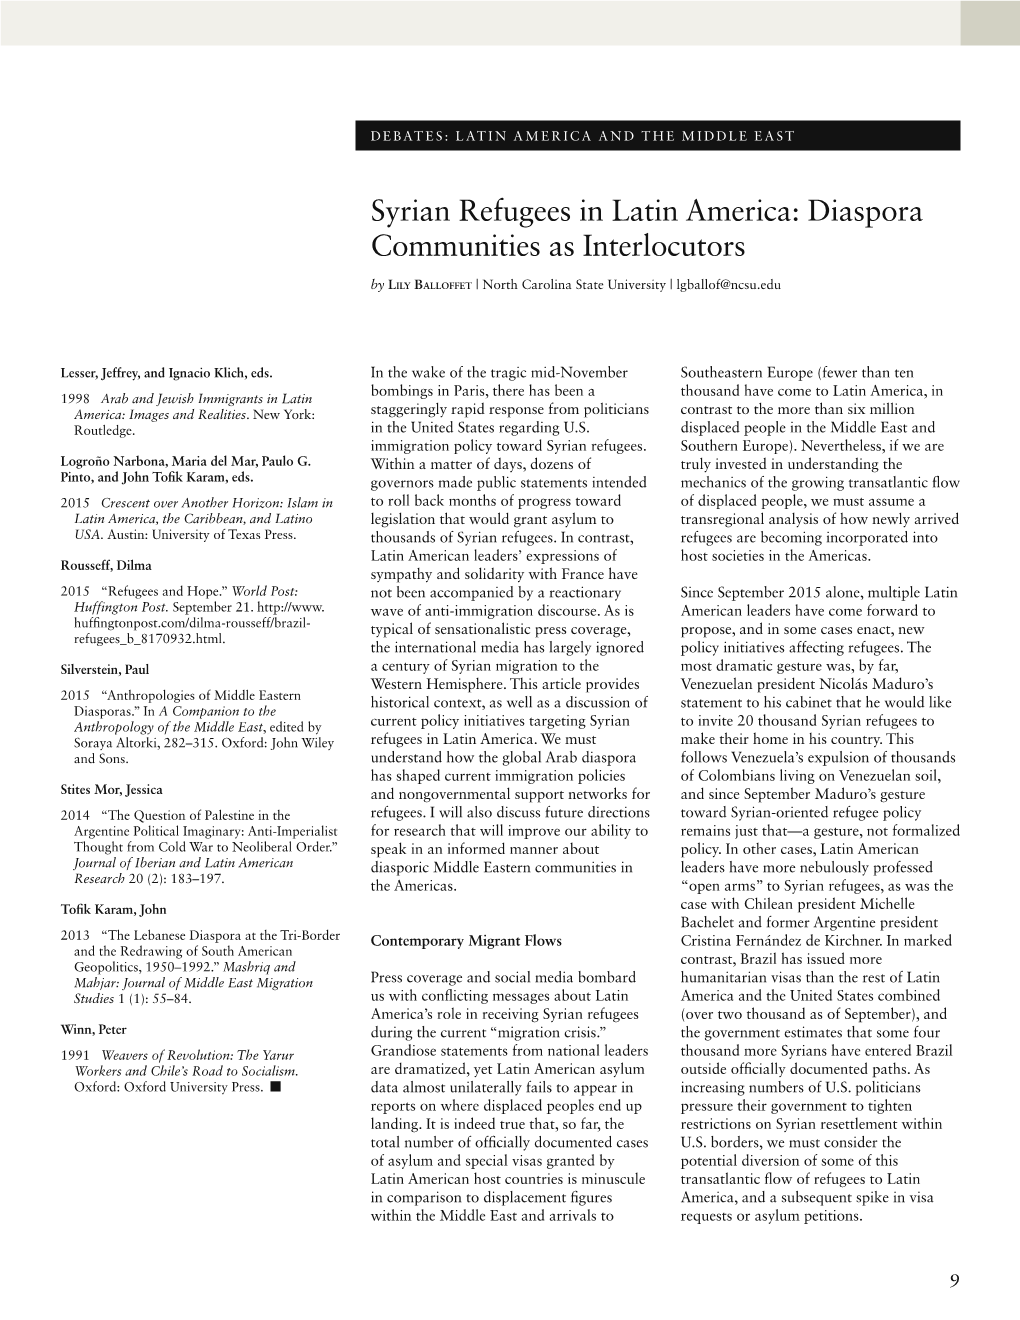 Syrian Refugees in Latin America: Diaspora Communities As Interlocutors